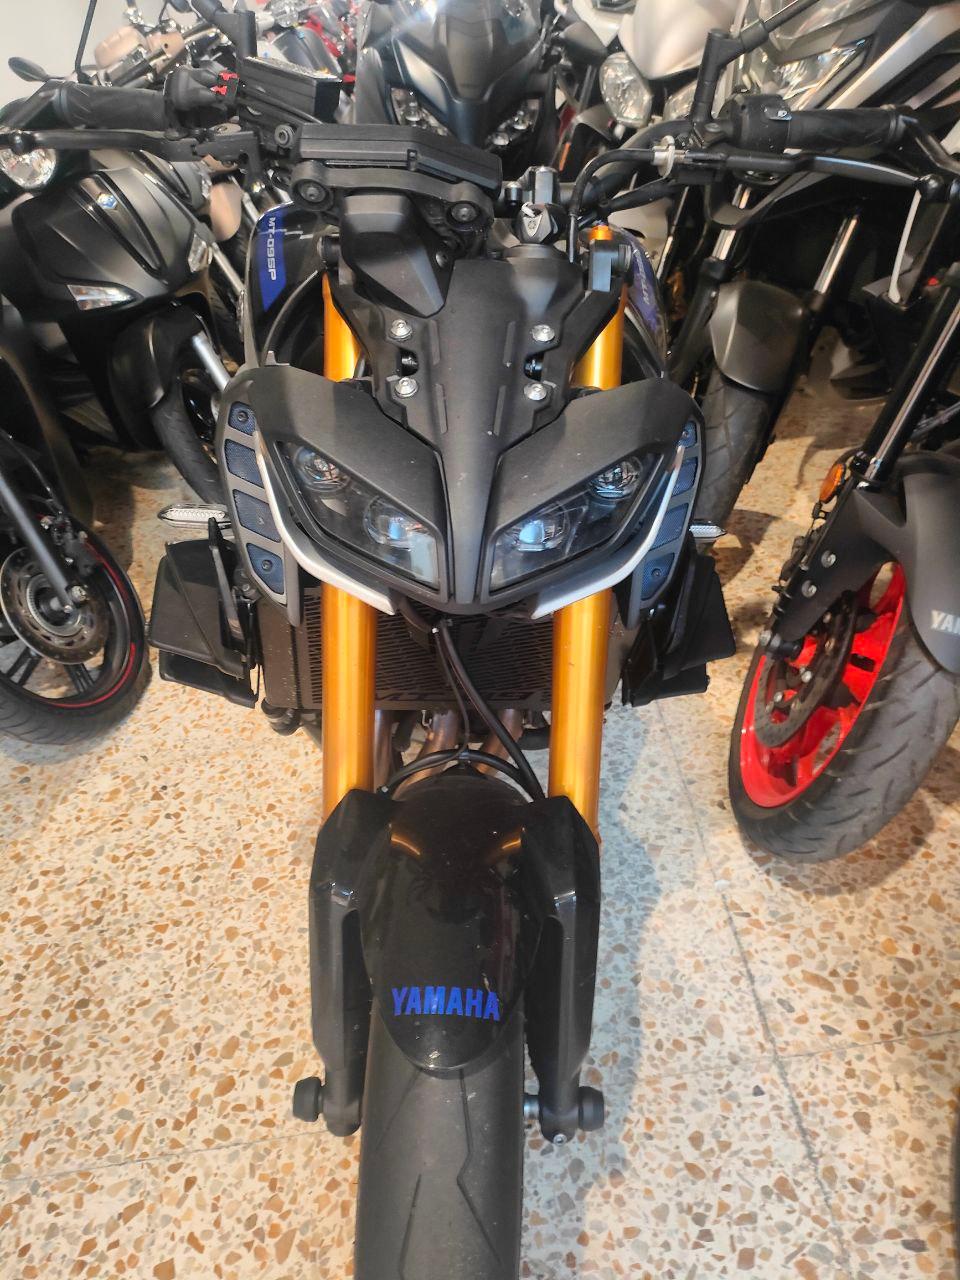 Yamaha MT-09 SP - 2019 19085 Km